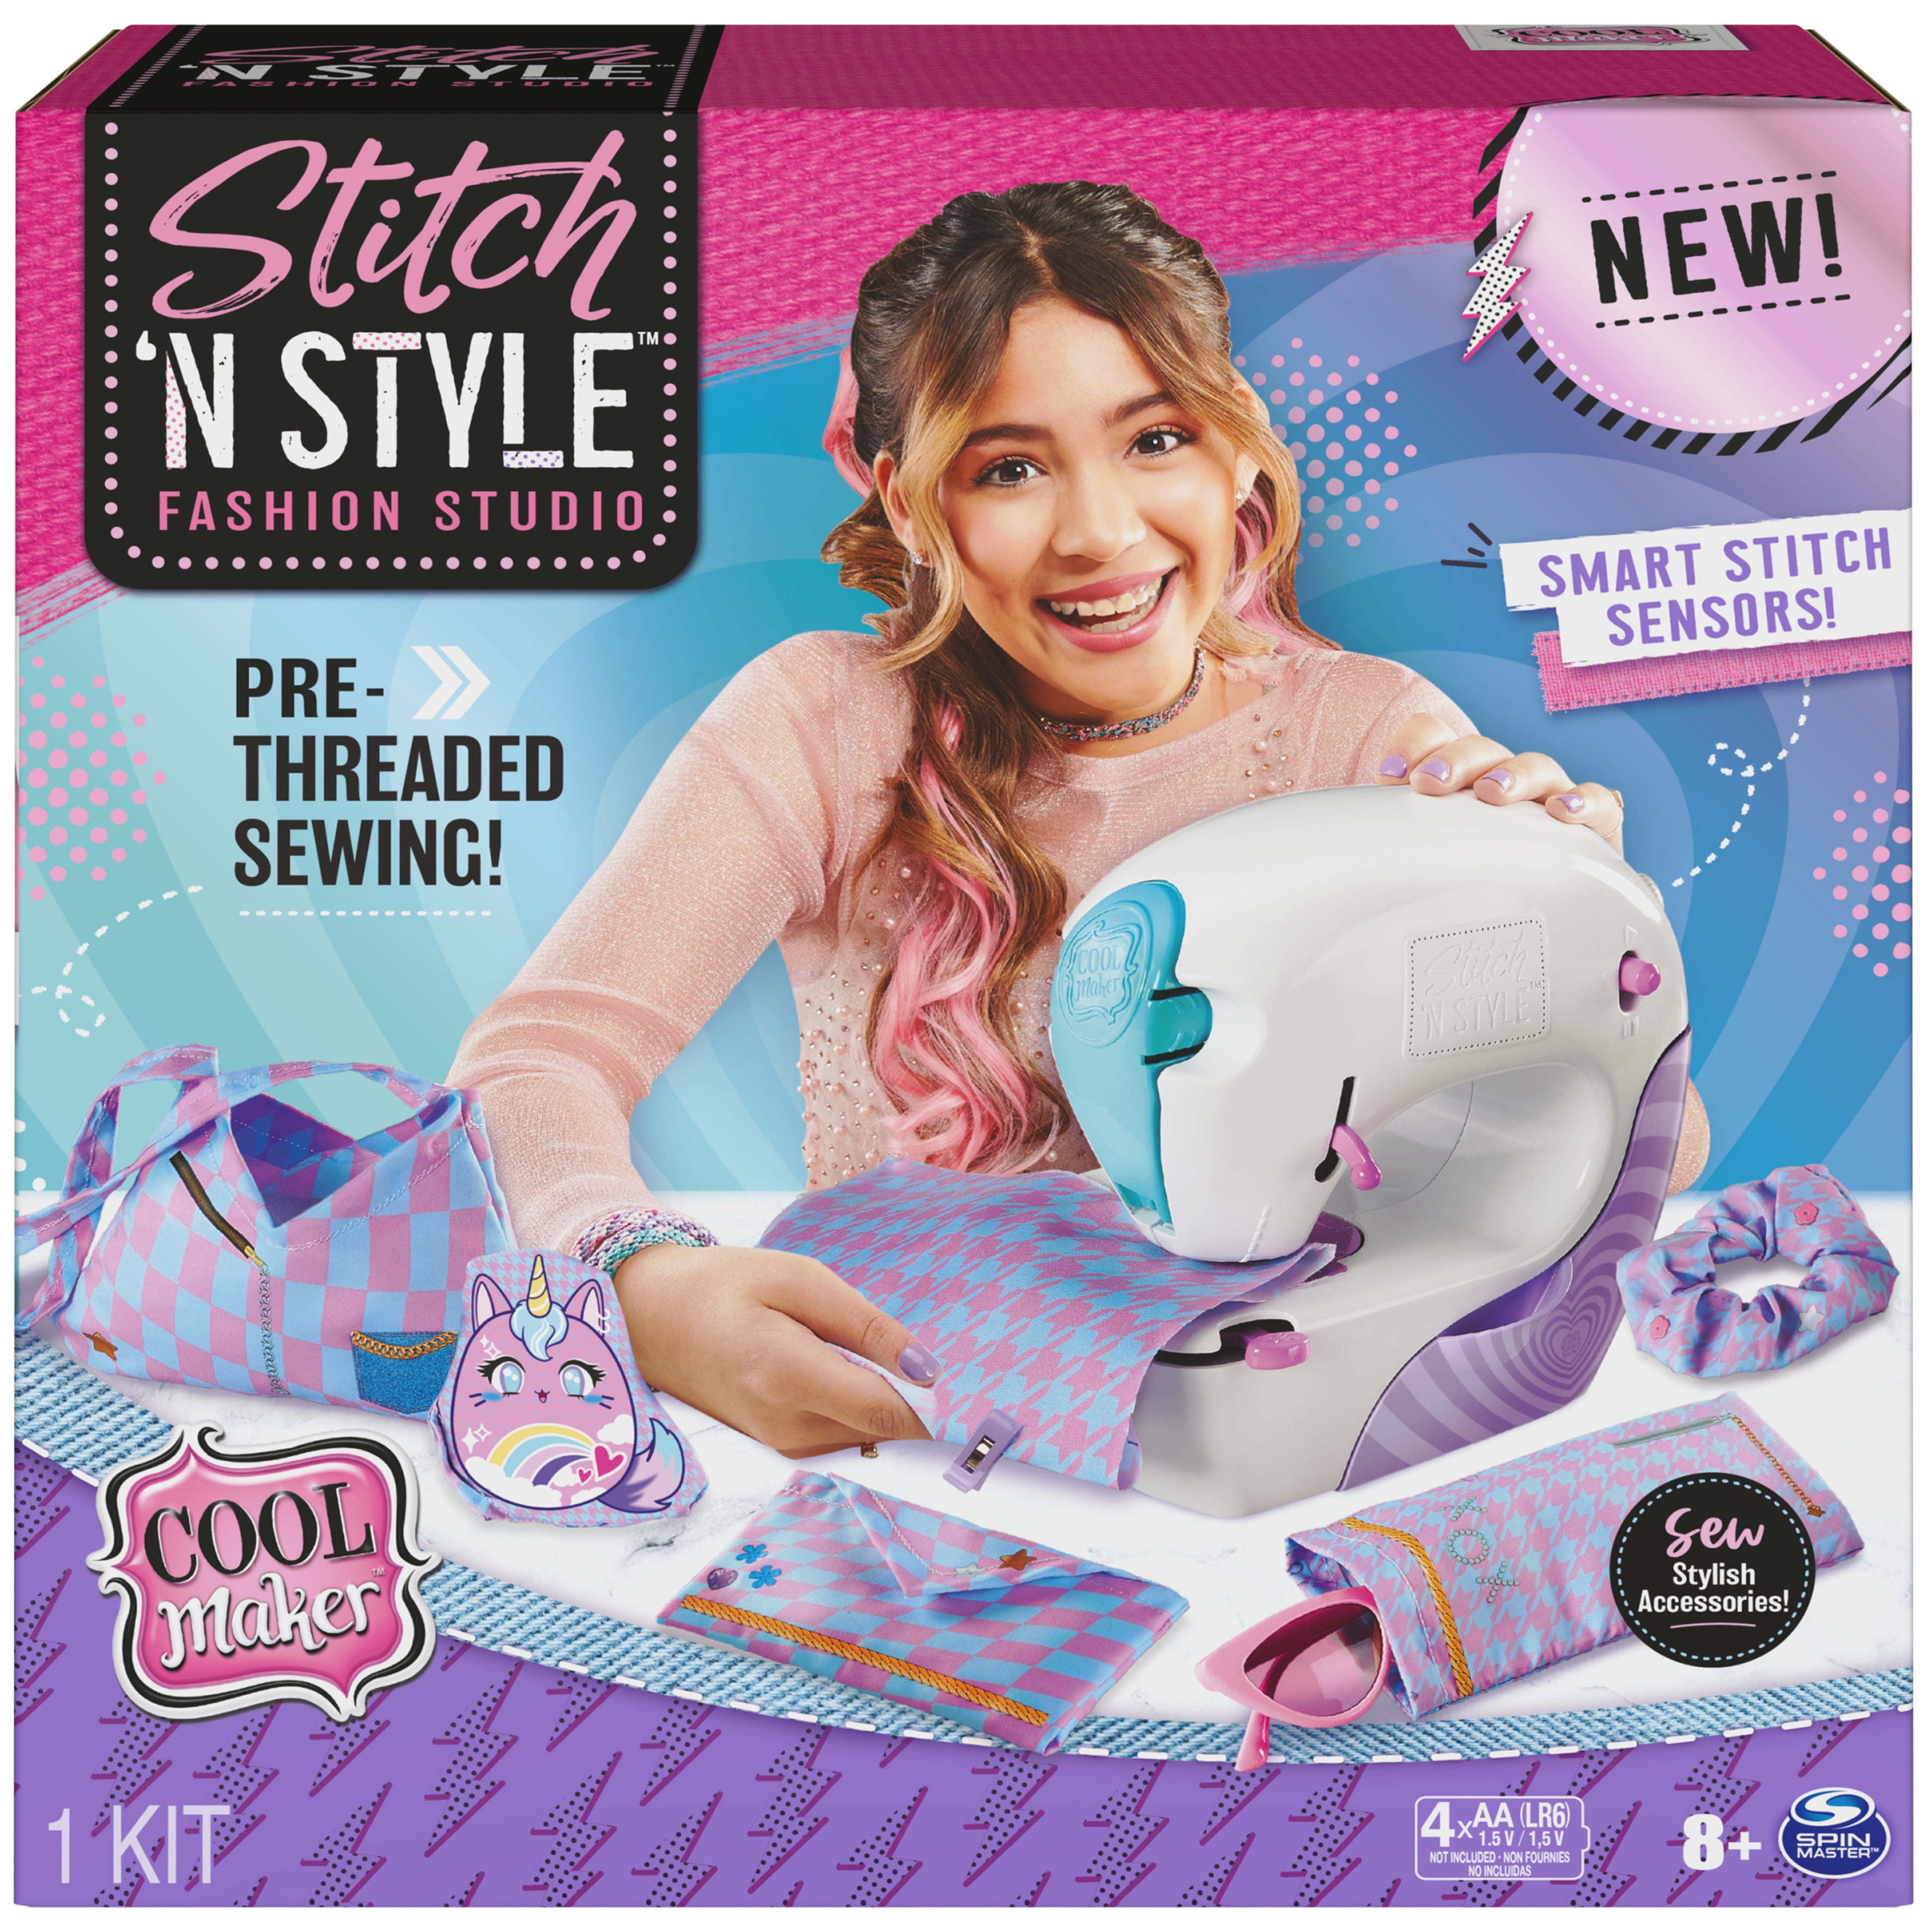 Cool Maker Stitch N Style Fashion Studio, Pre-Threaded Sewing Machine